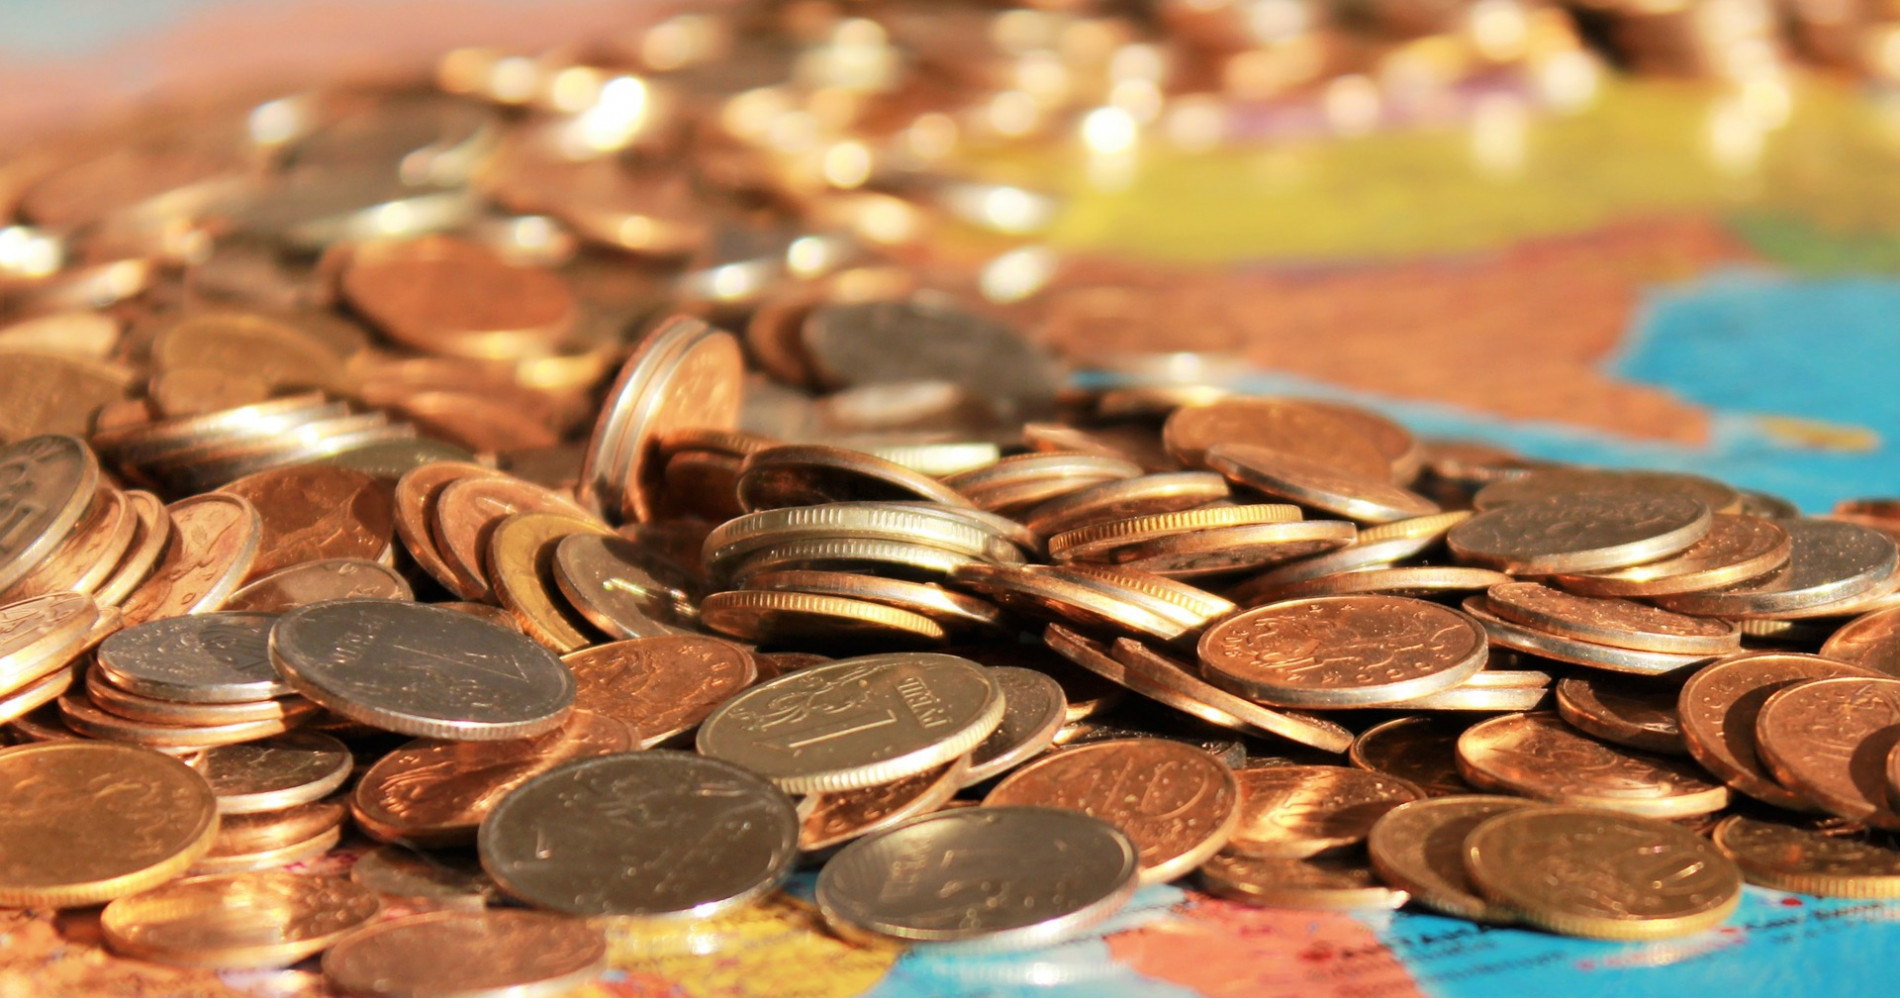 Coins Money (Sumber gambar: Image by klimkin from Pixabay )